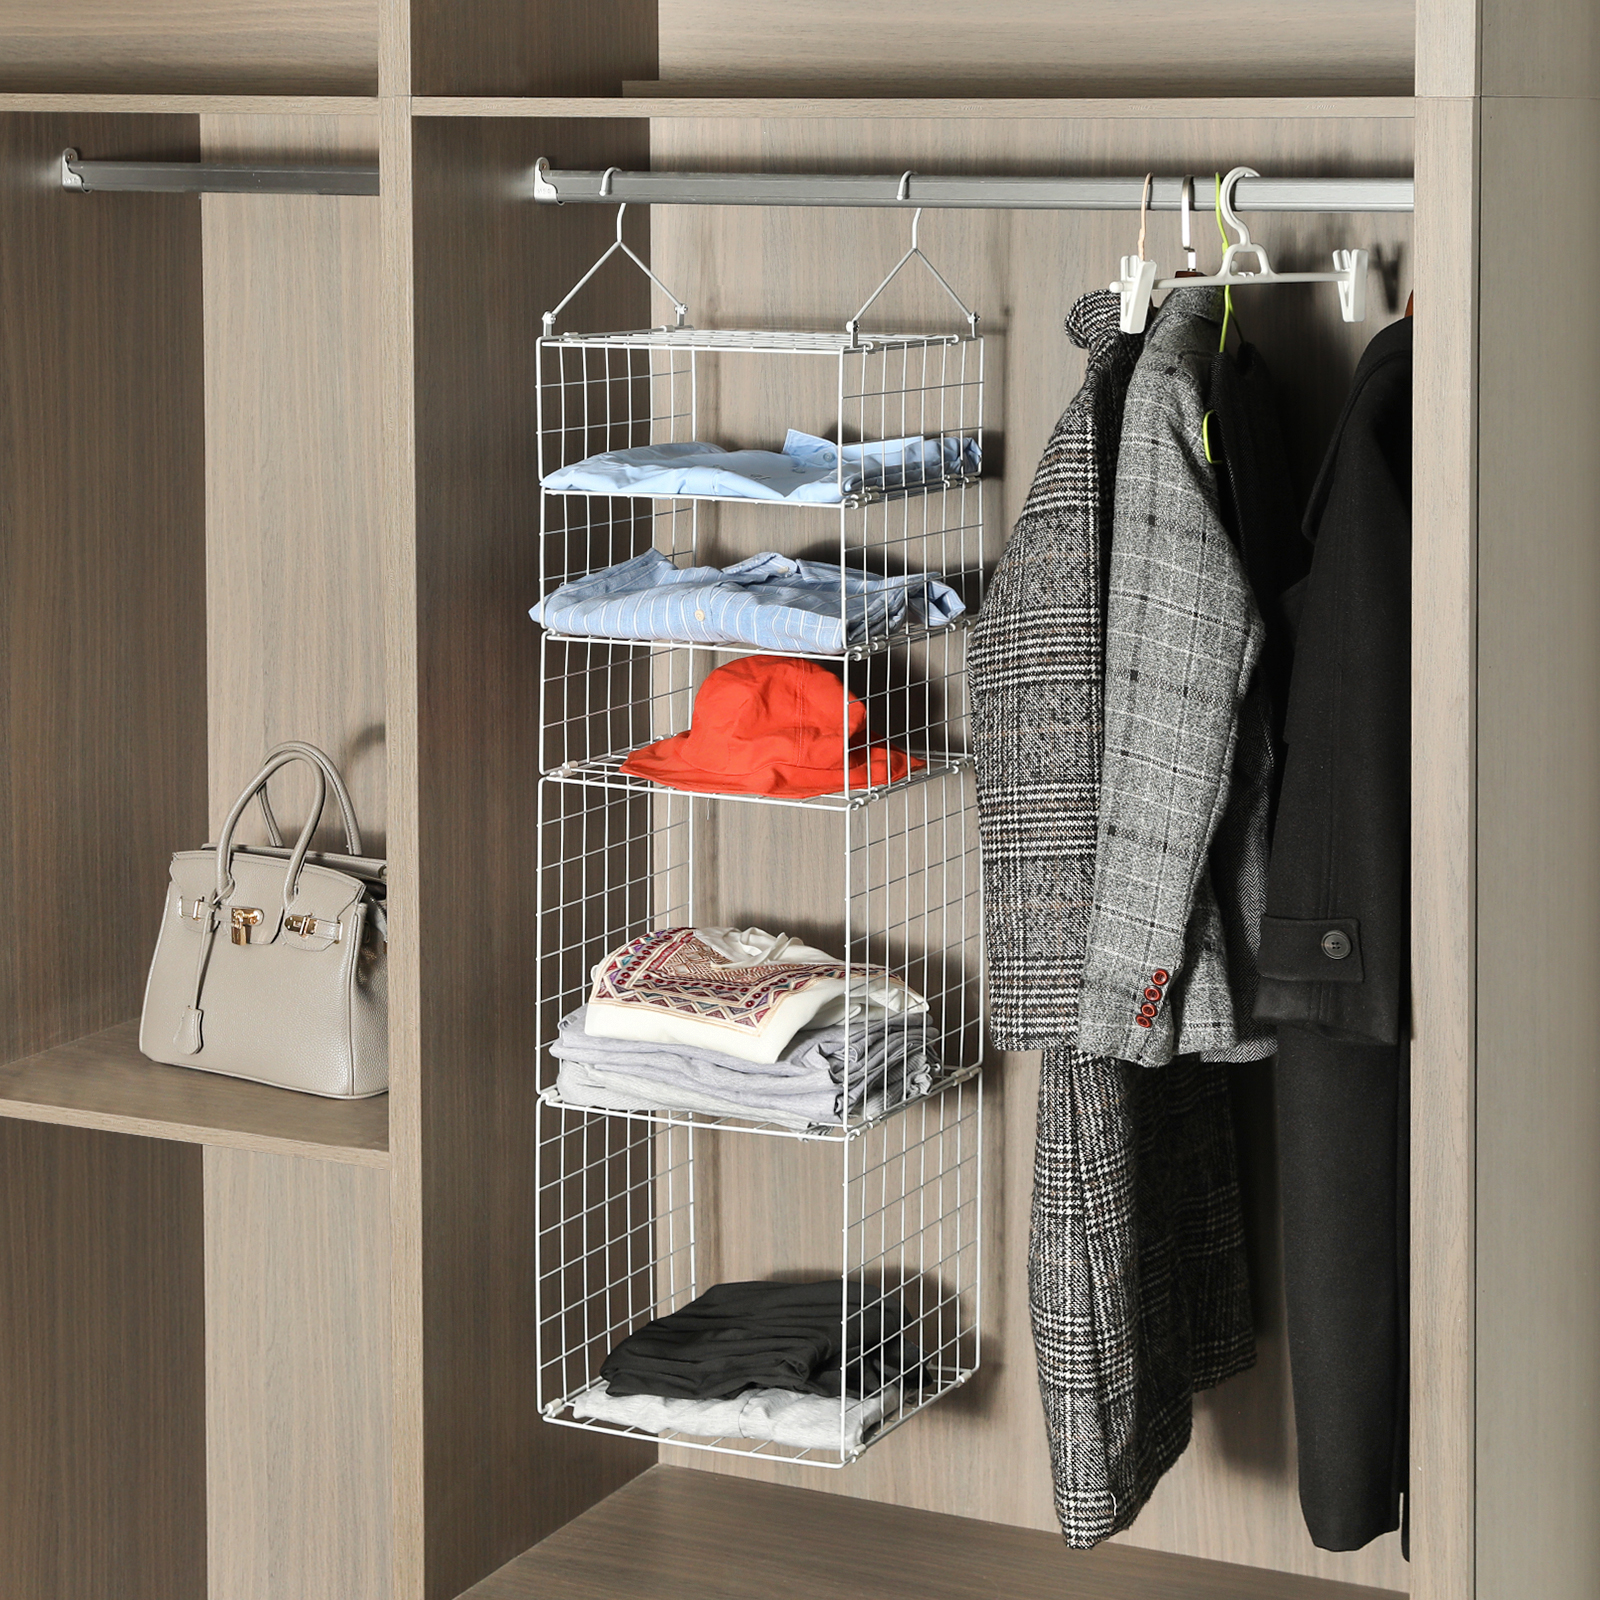 Foldable Closet Organizer Clothes Shelves with S Hooks